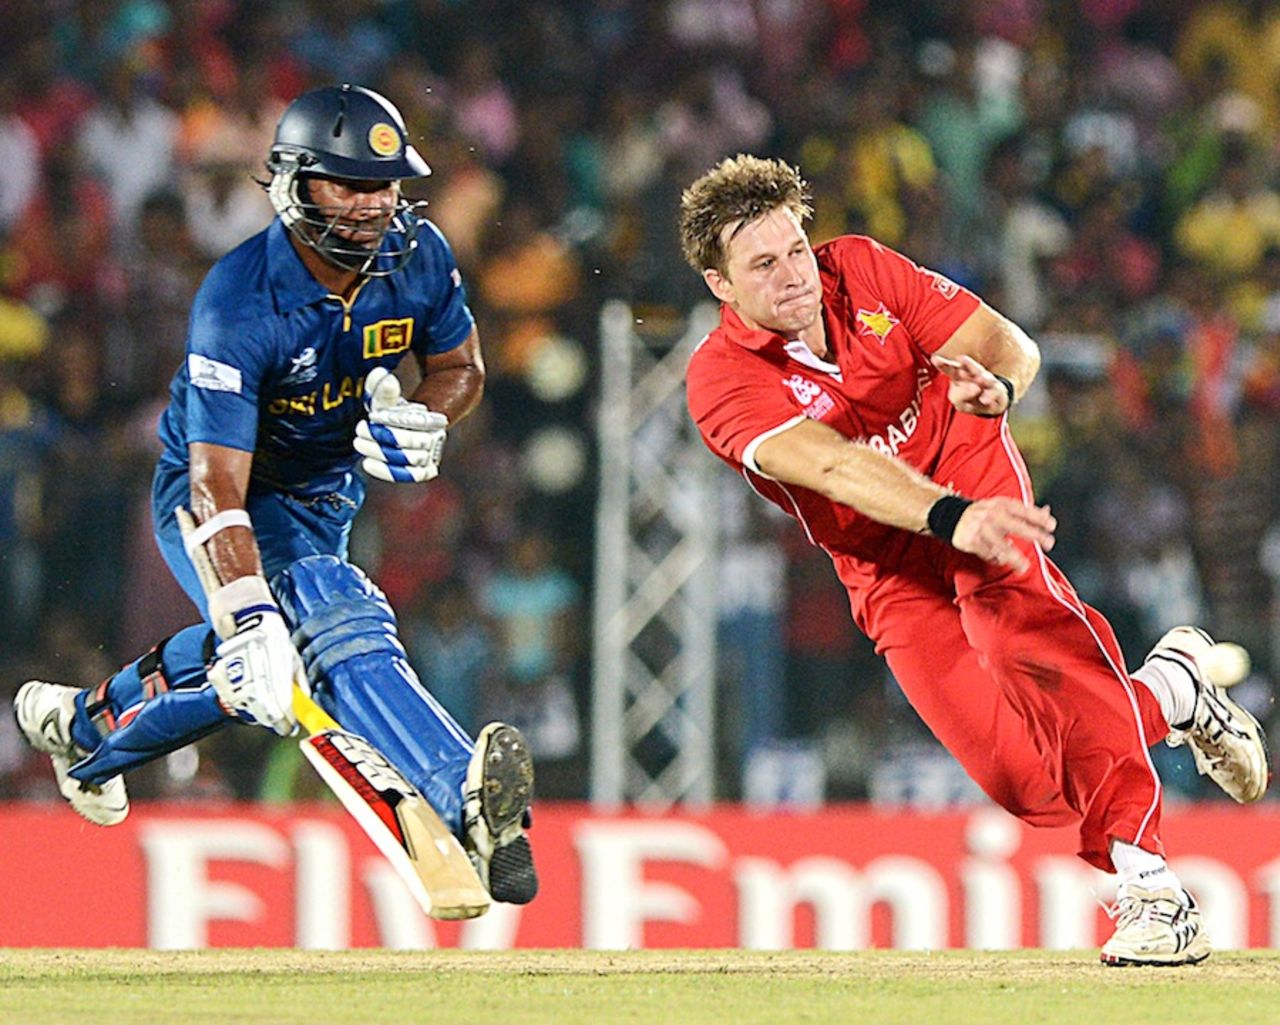 Kyle Jarvis attempts a run-out against Kumar Sangakkara, Sri Lanka v Zimbabwe, Group C, World T20 2012, Hambantota, September 18, 2012